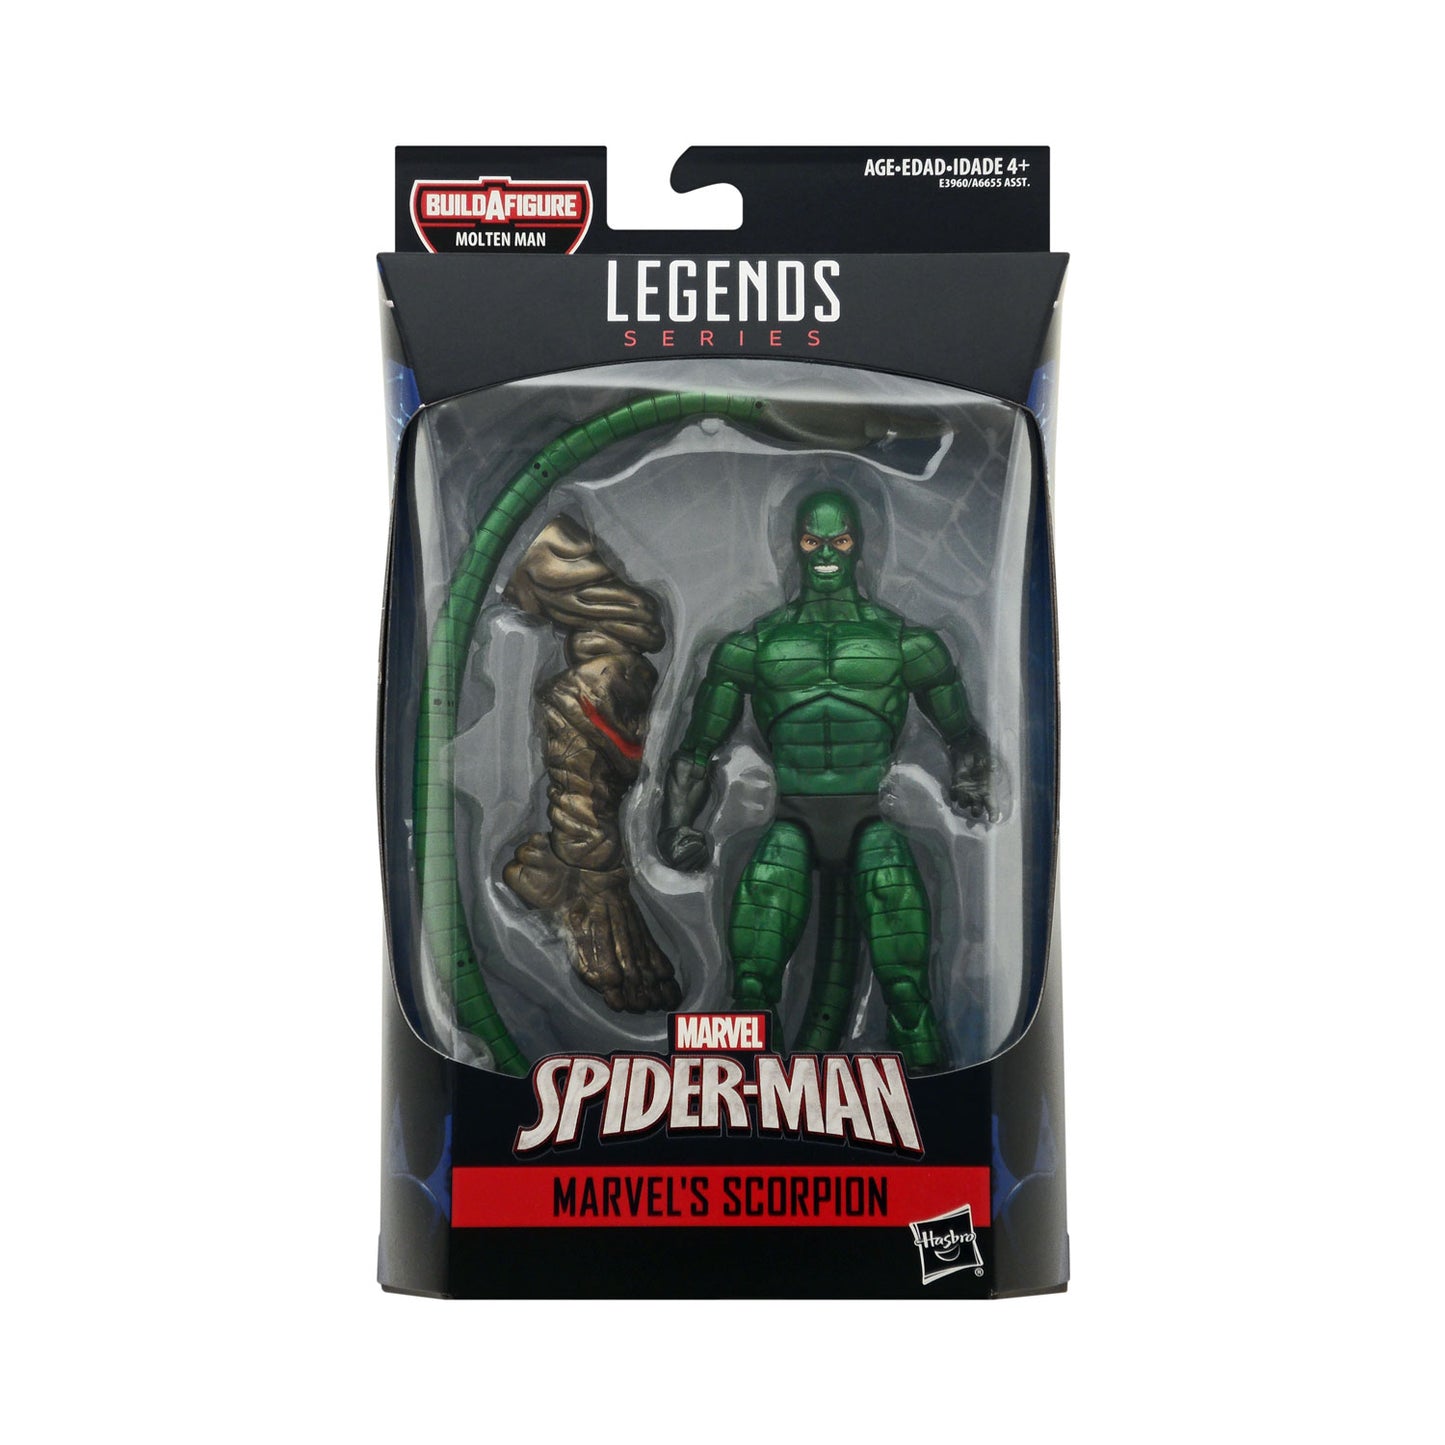 Marvel Legends Molten Man Series Marvel's Scorpion